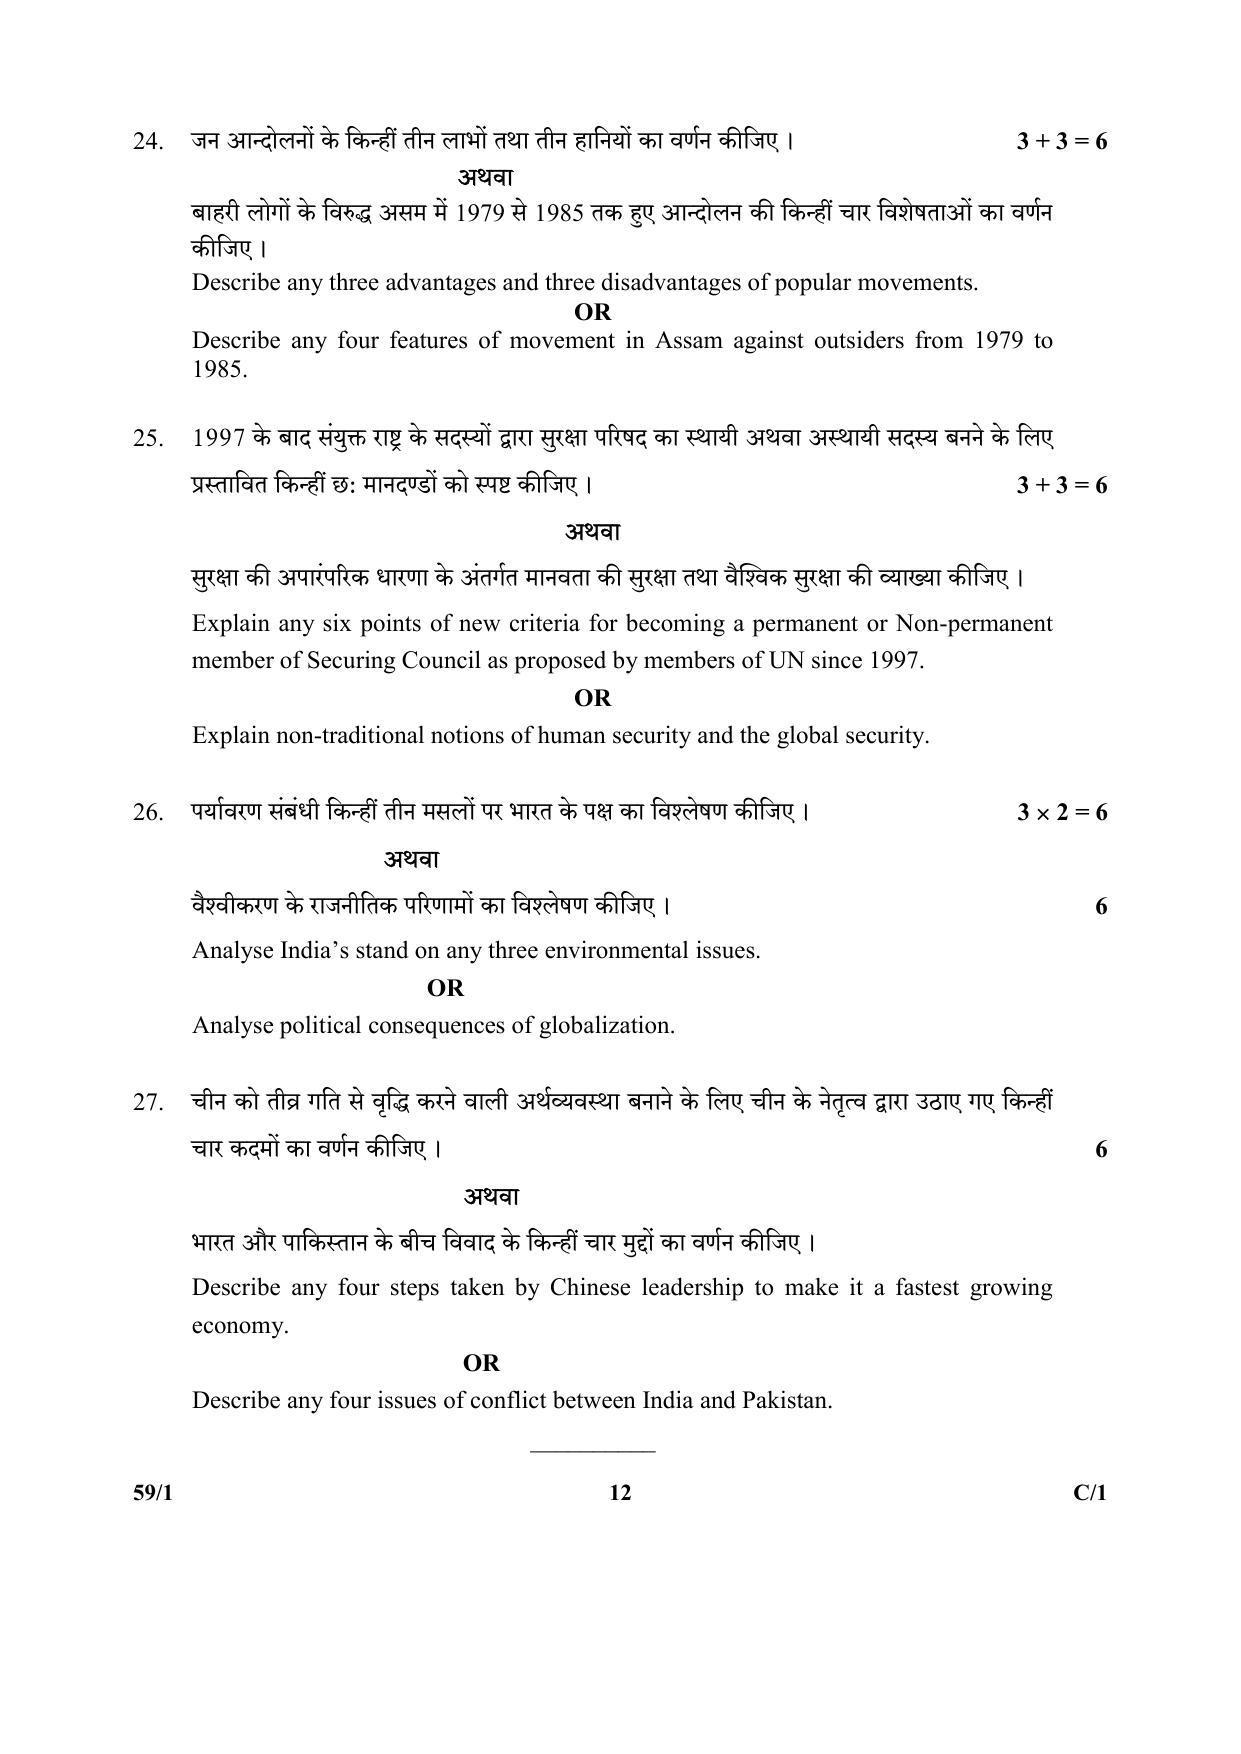 CBSE Class 12 221-1 Political Science_Punjabi 2018 Compartment Question Paper - Page 20